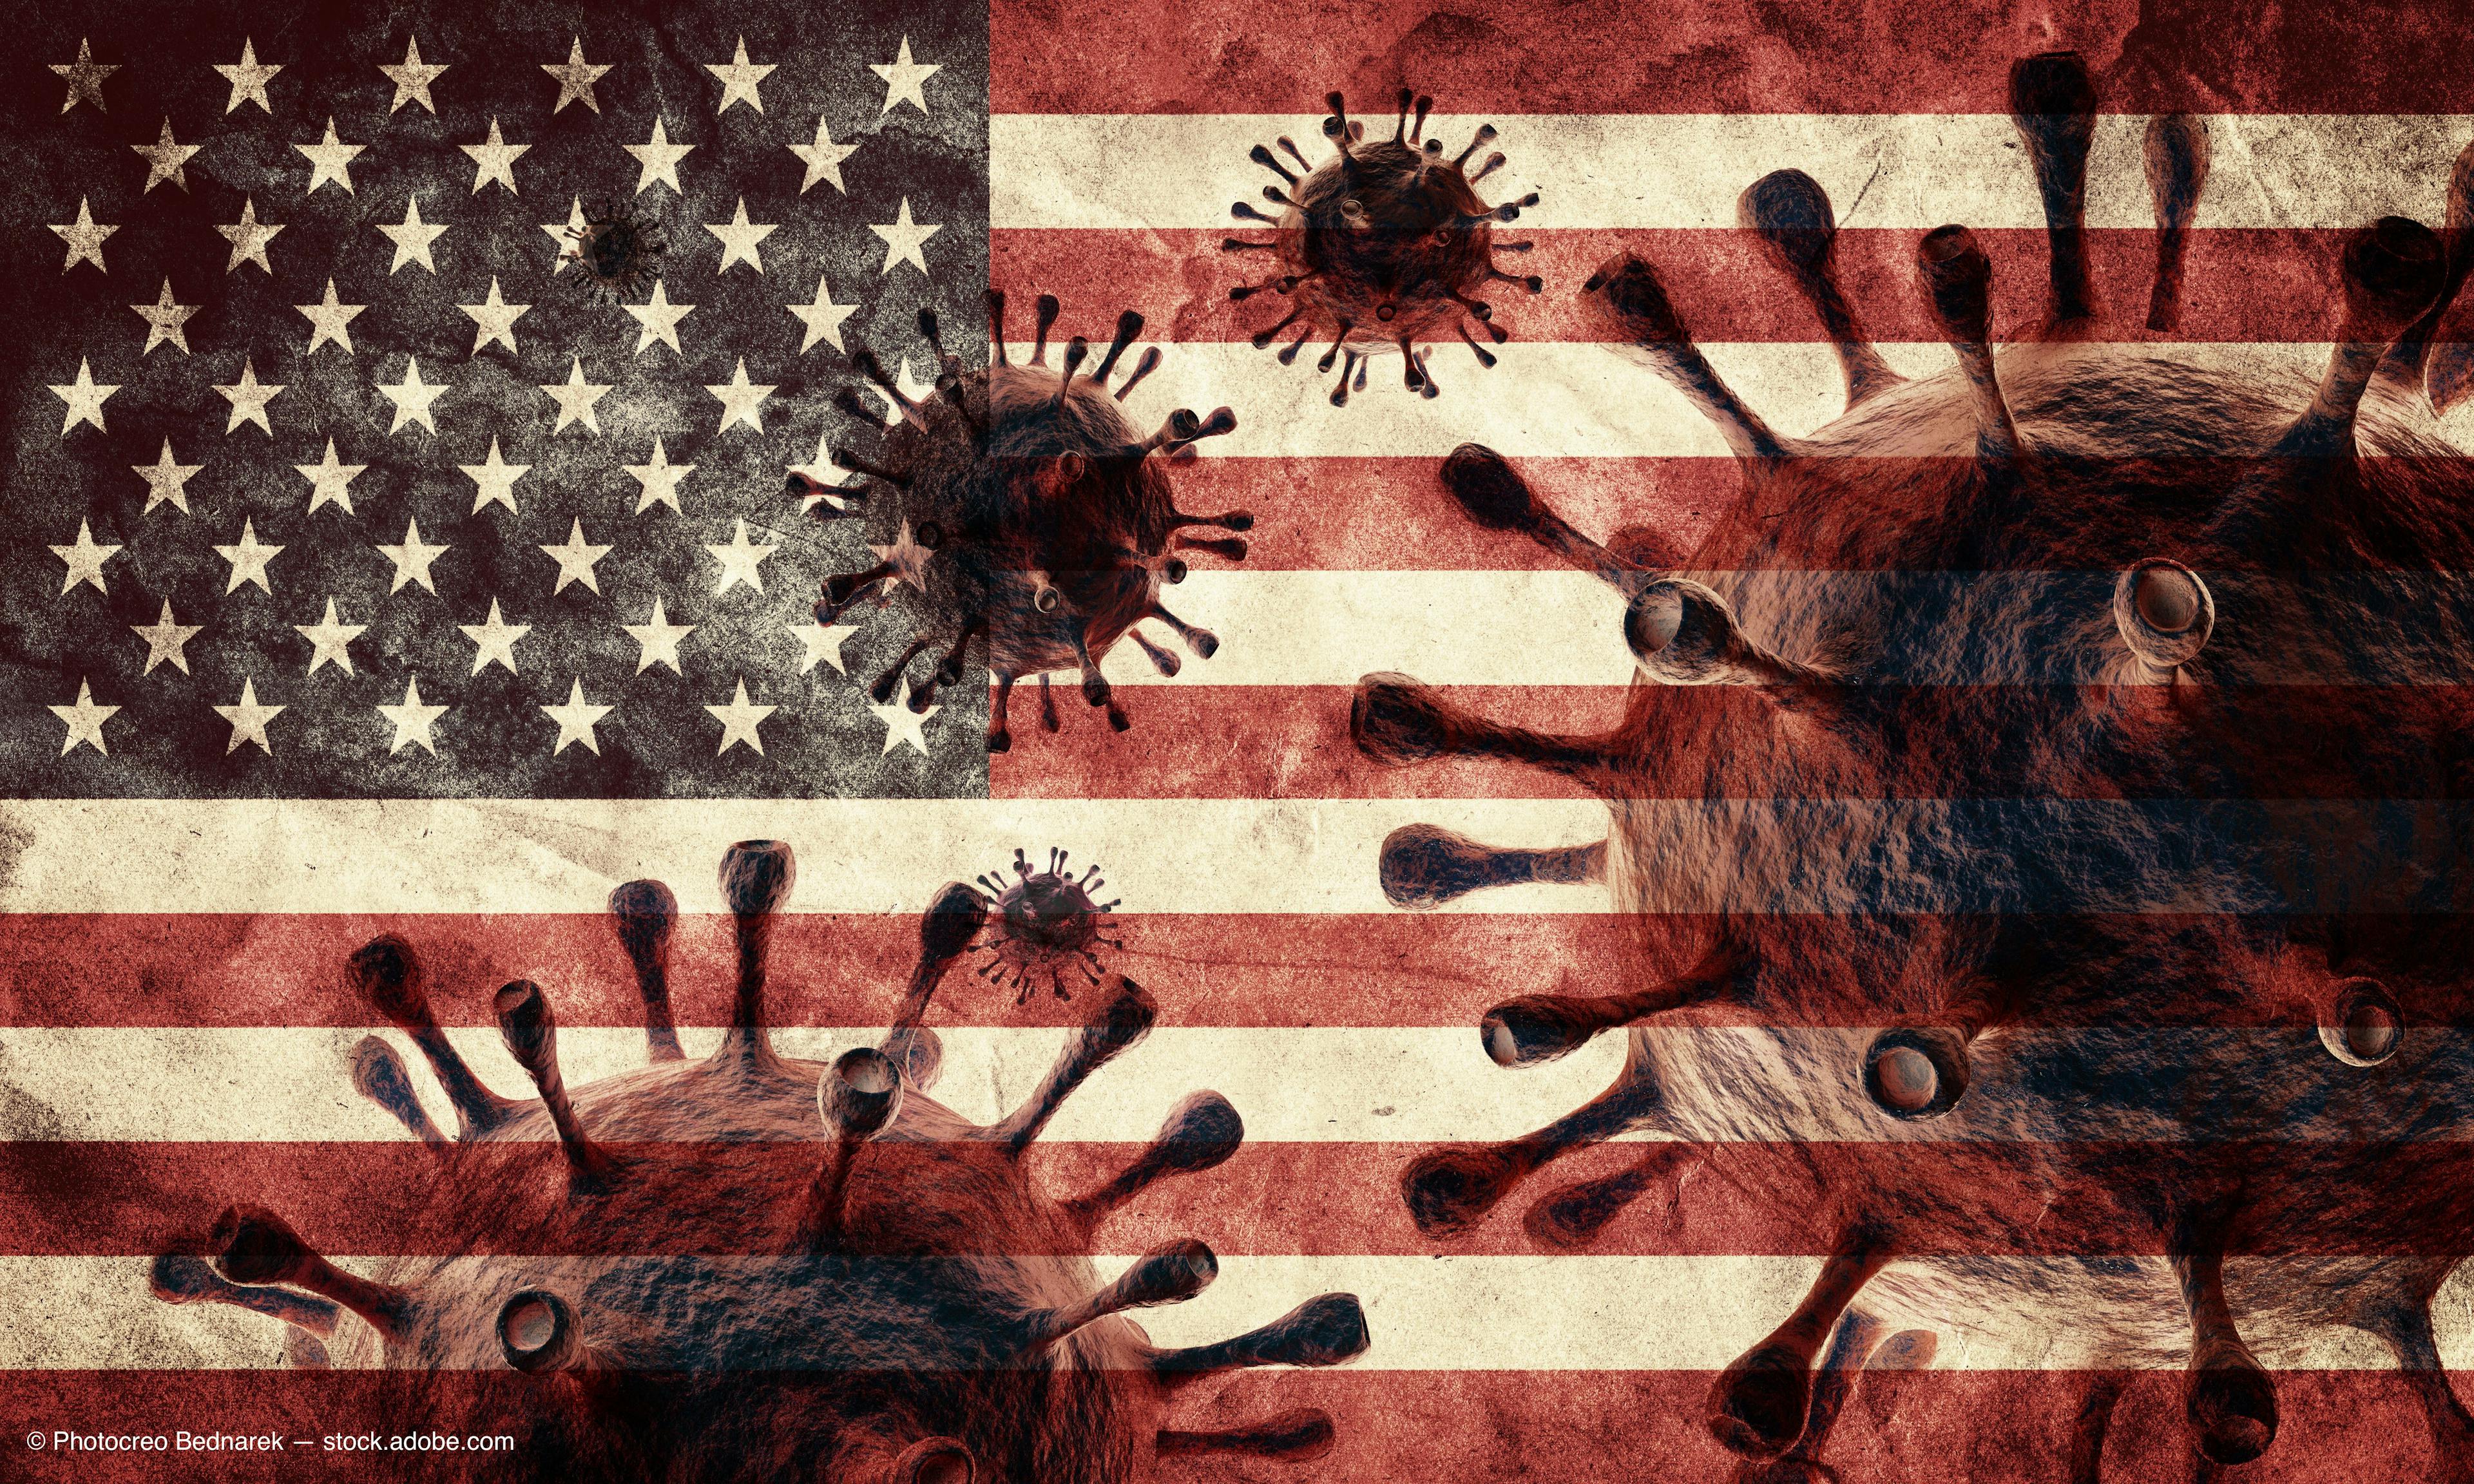 pandemics in the U.S. 